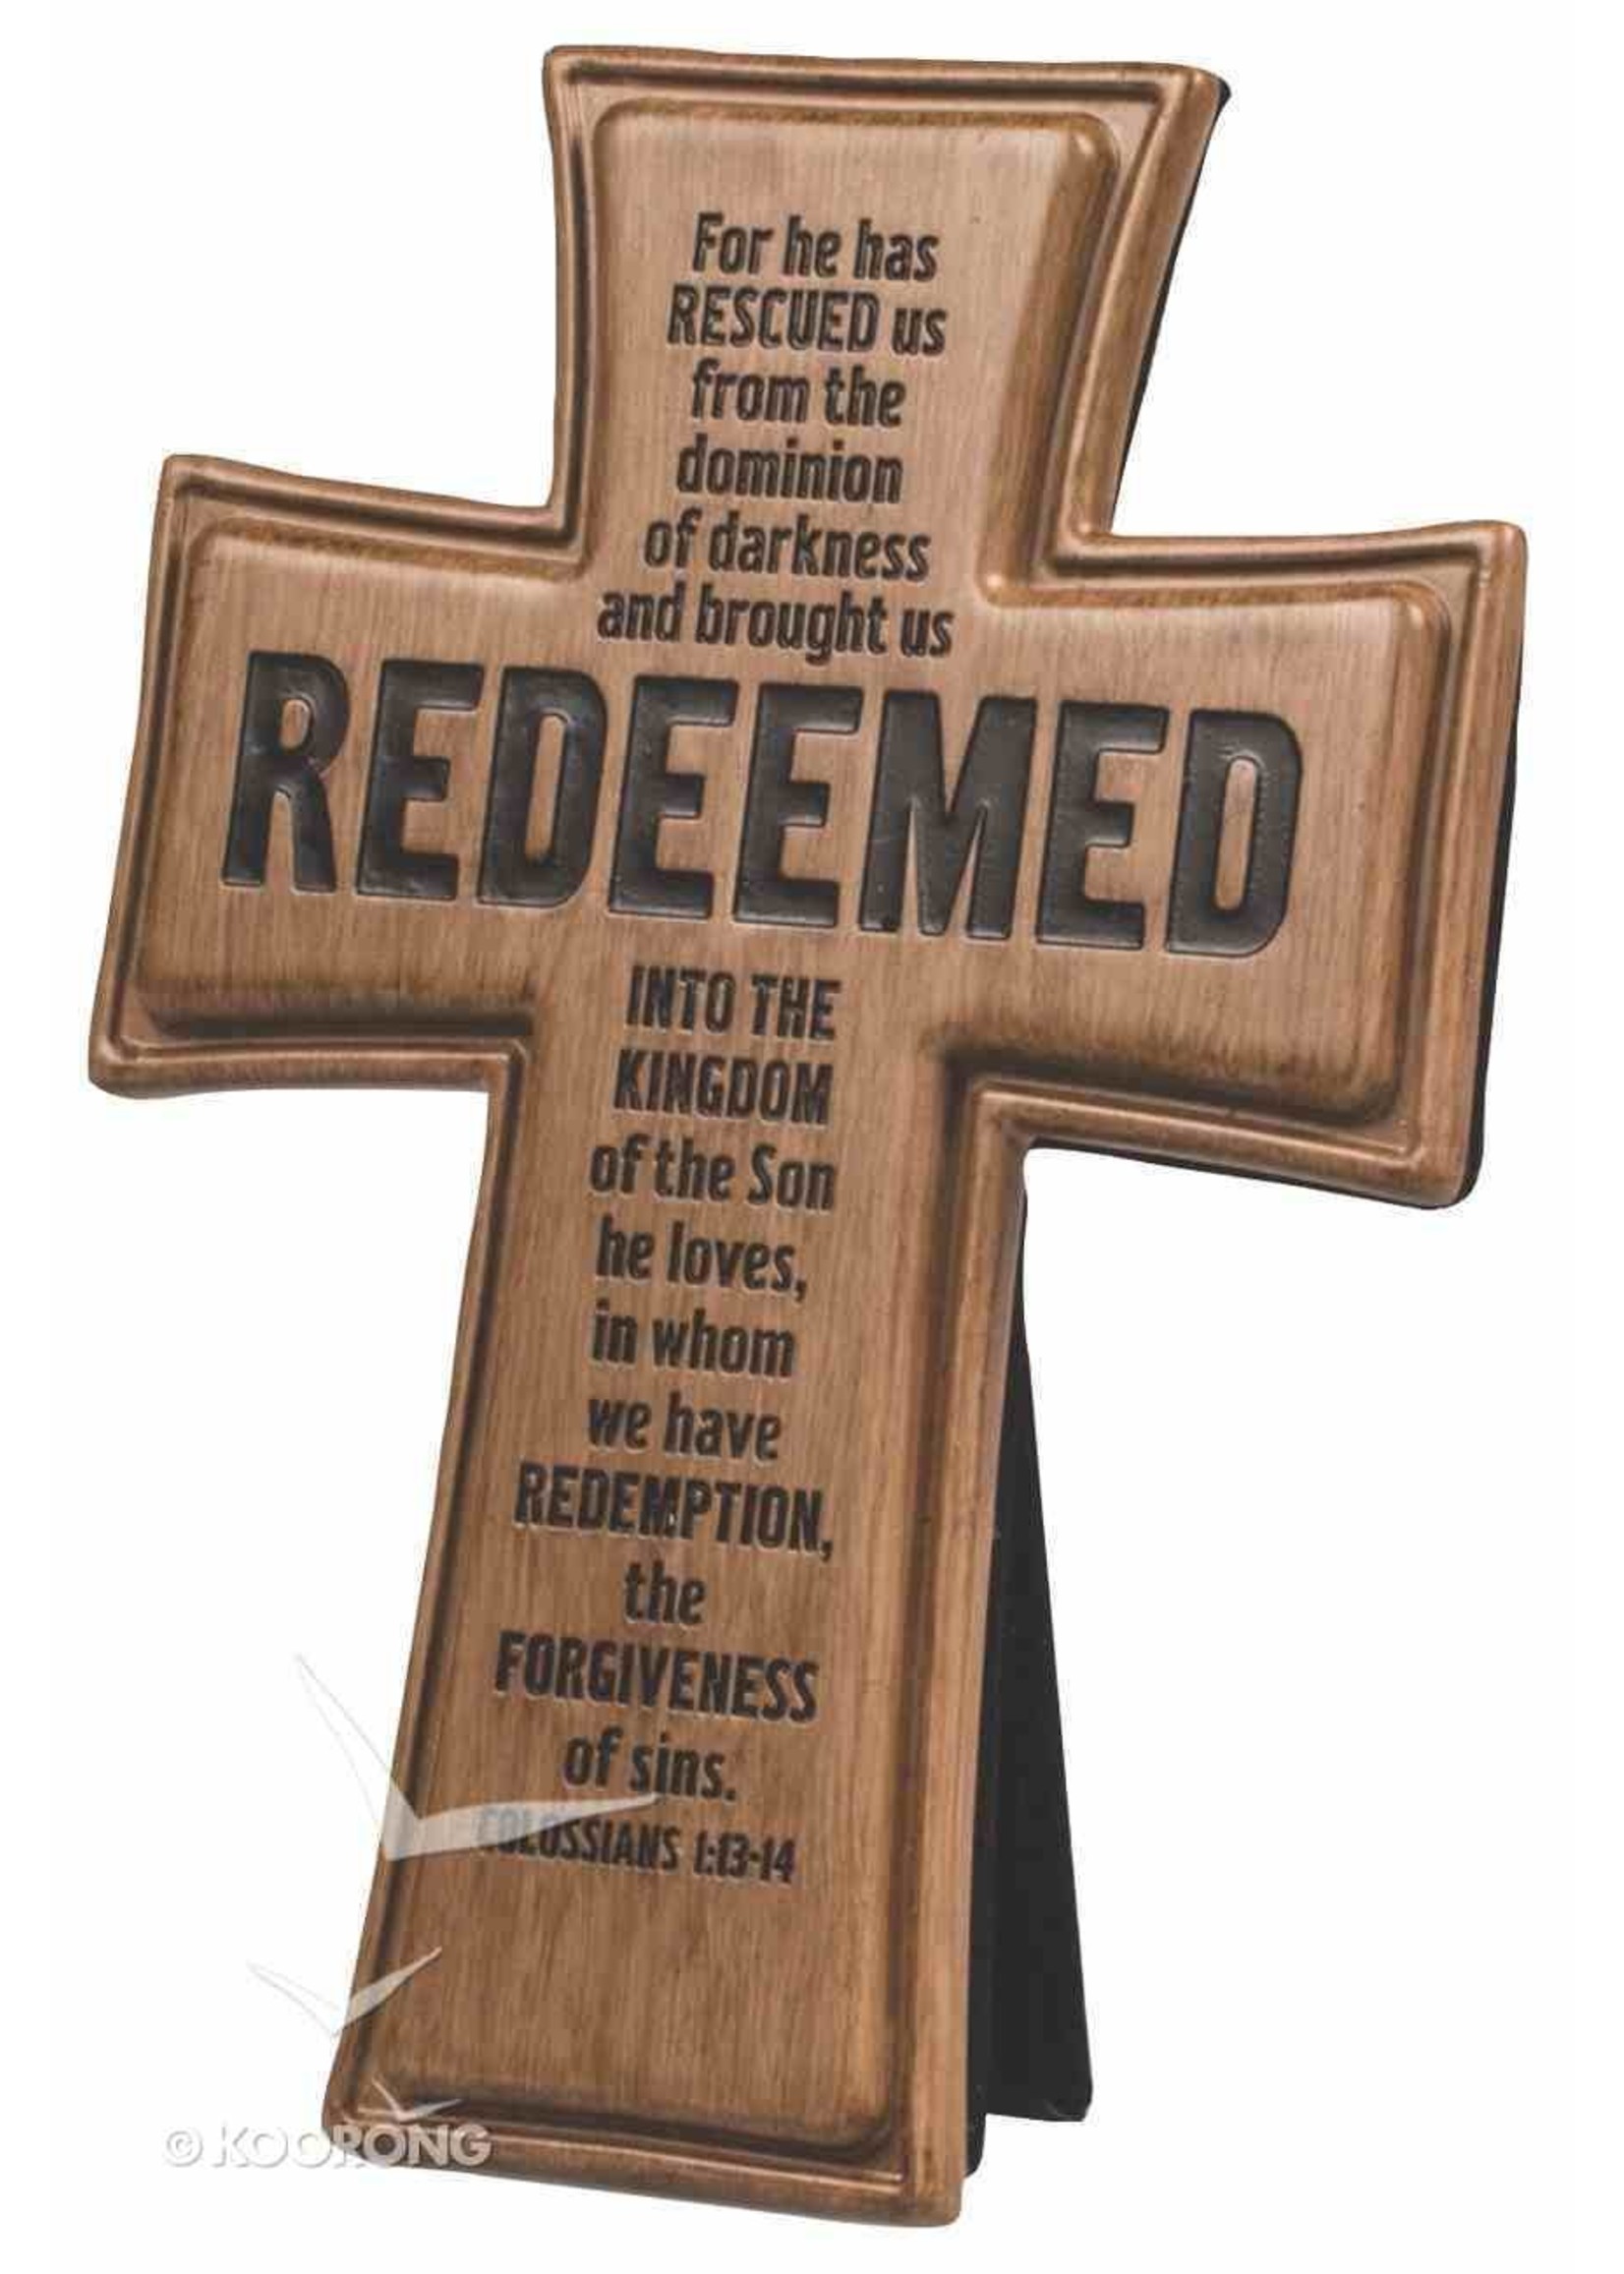 Redeemed Cross